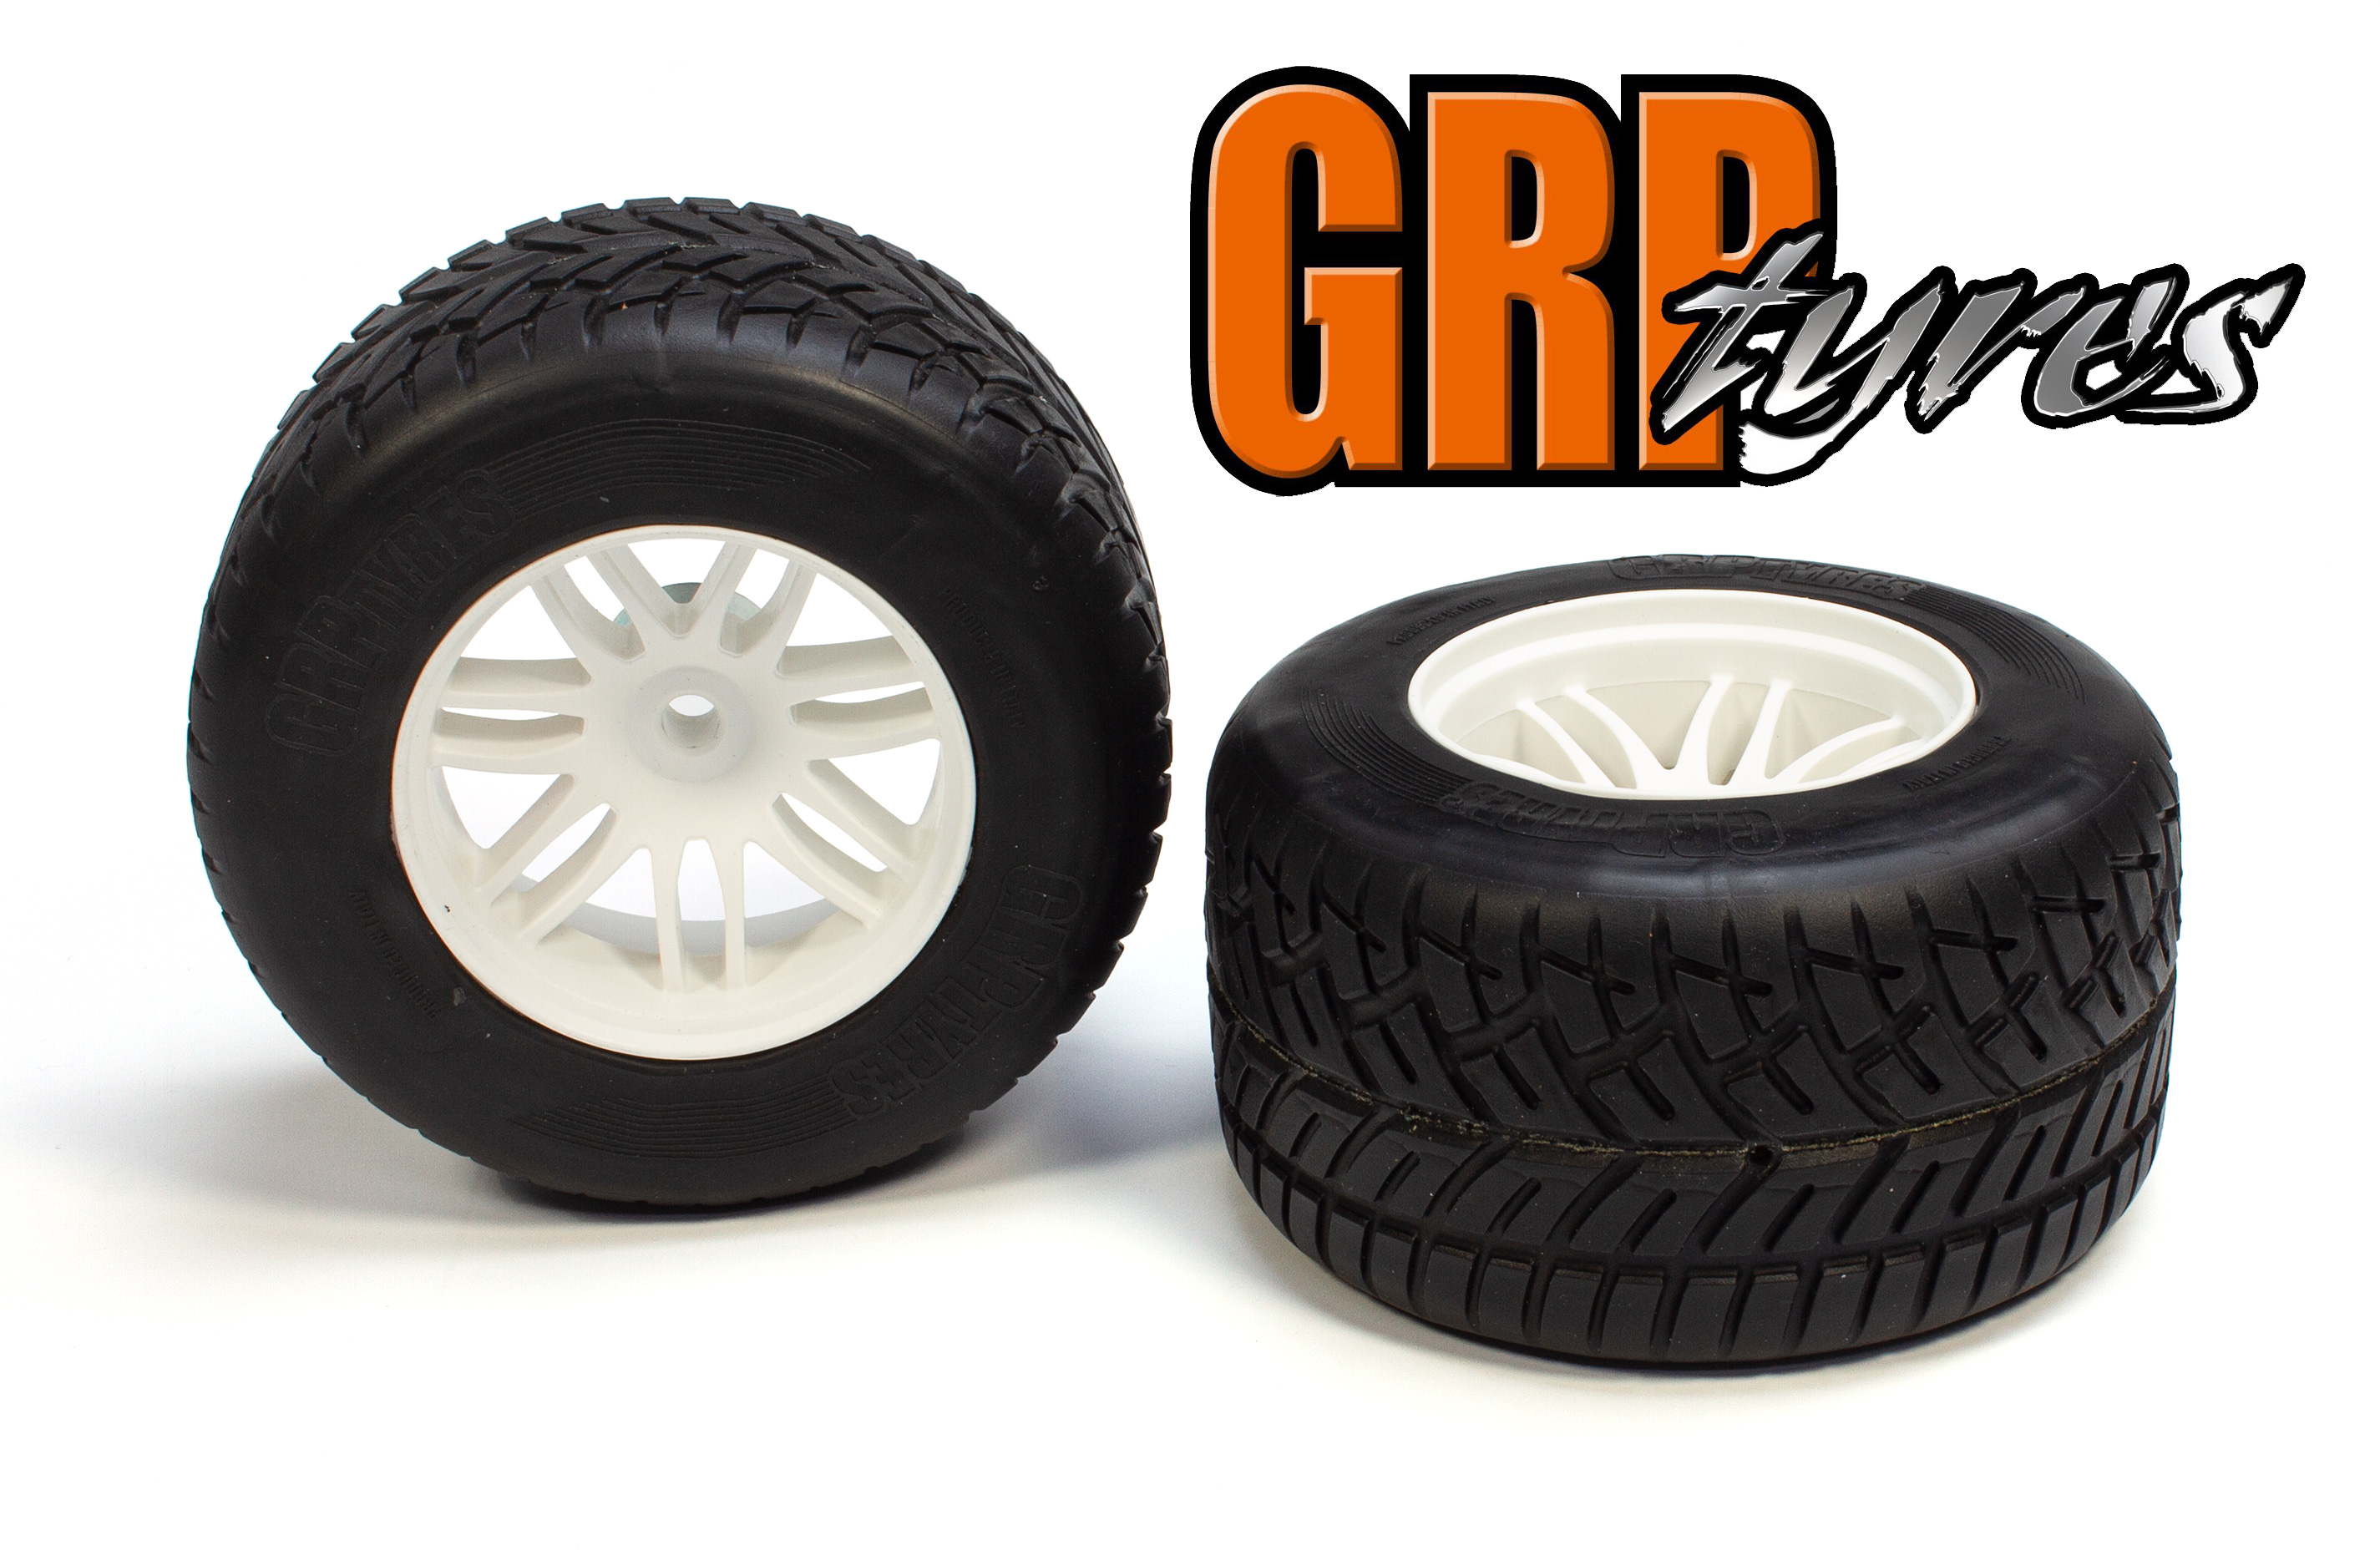 GWH44E Ellegi Formula 1 profile extra soft rain rear tires, glued